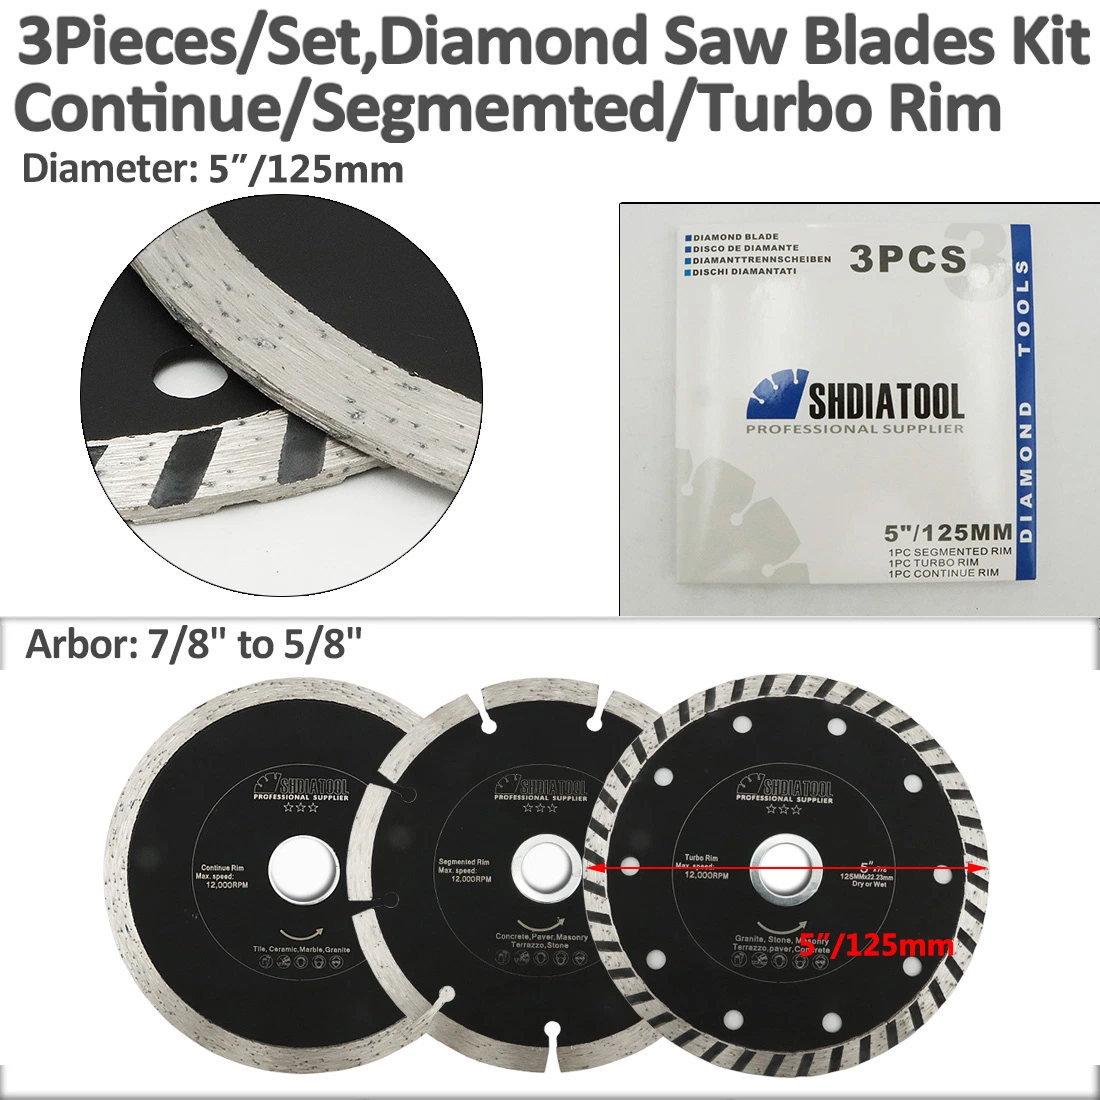 3pieces/Set Diamond Saw Blades Kit Continue/Segmented/Turbo Rim